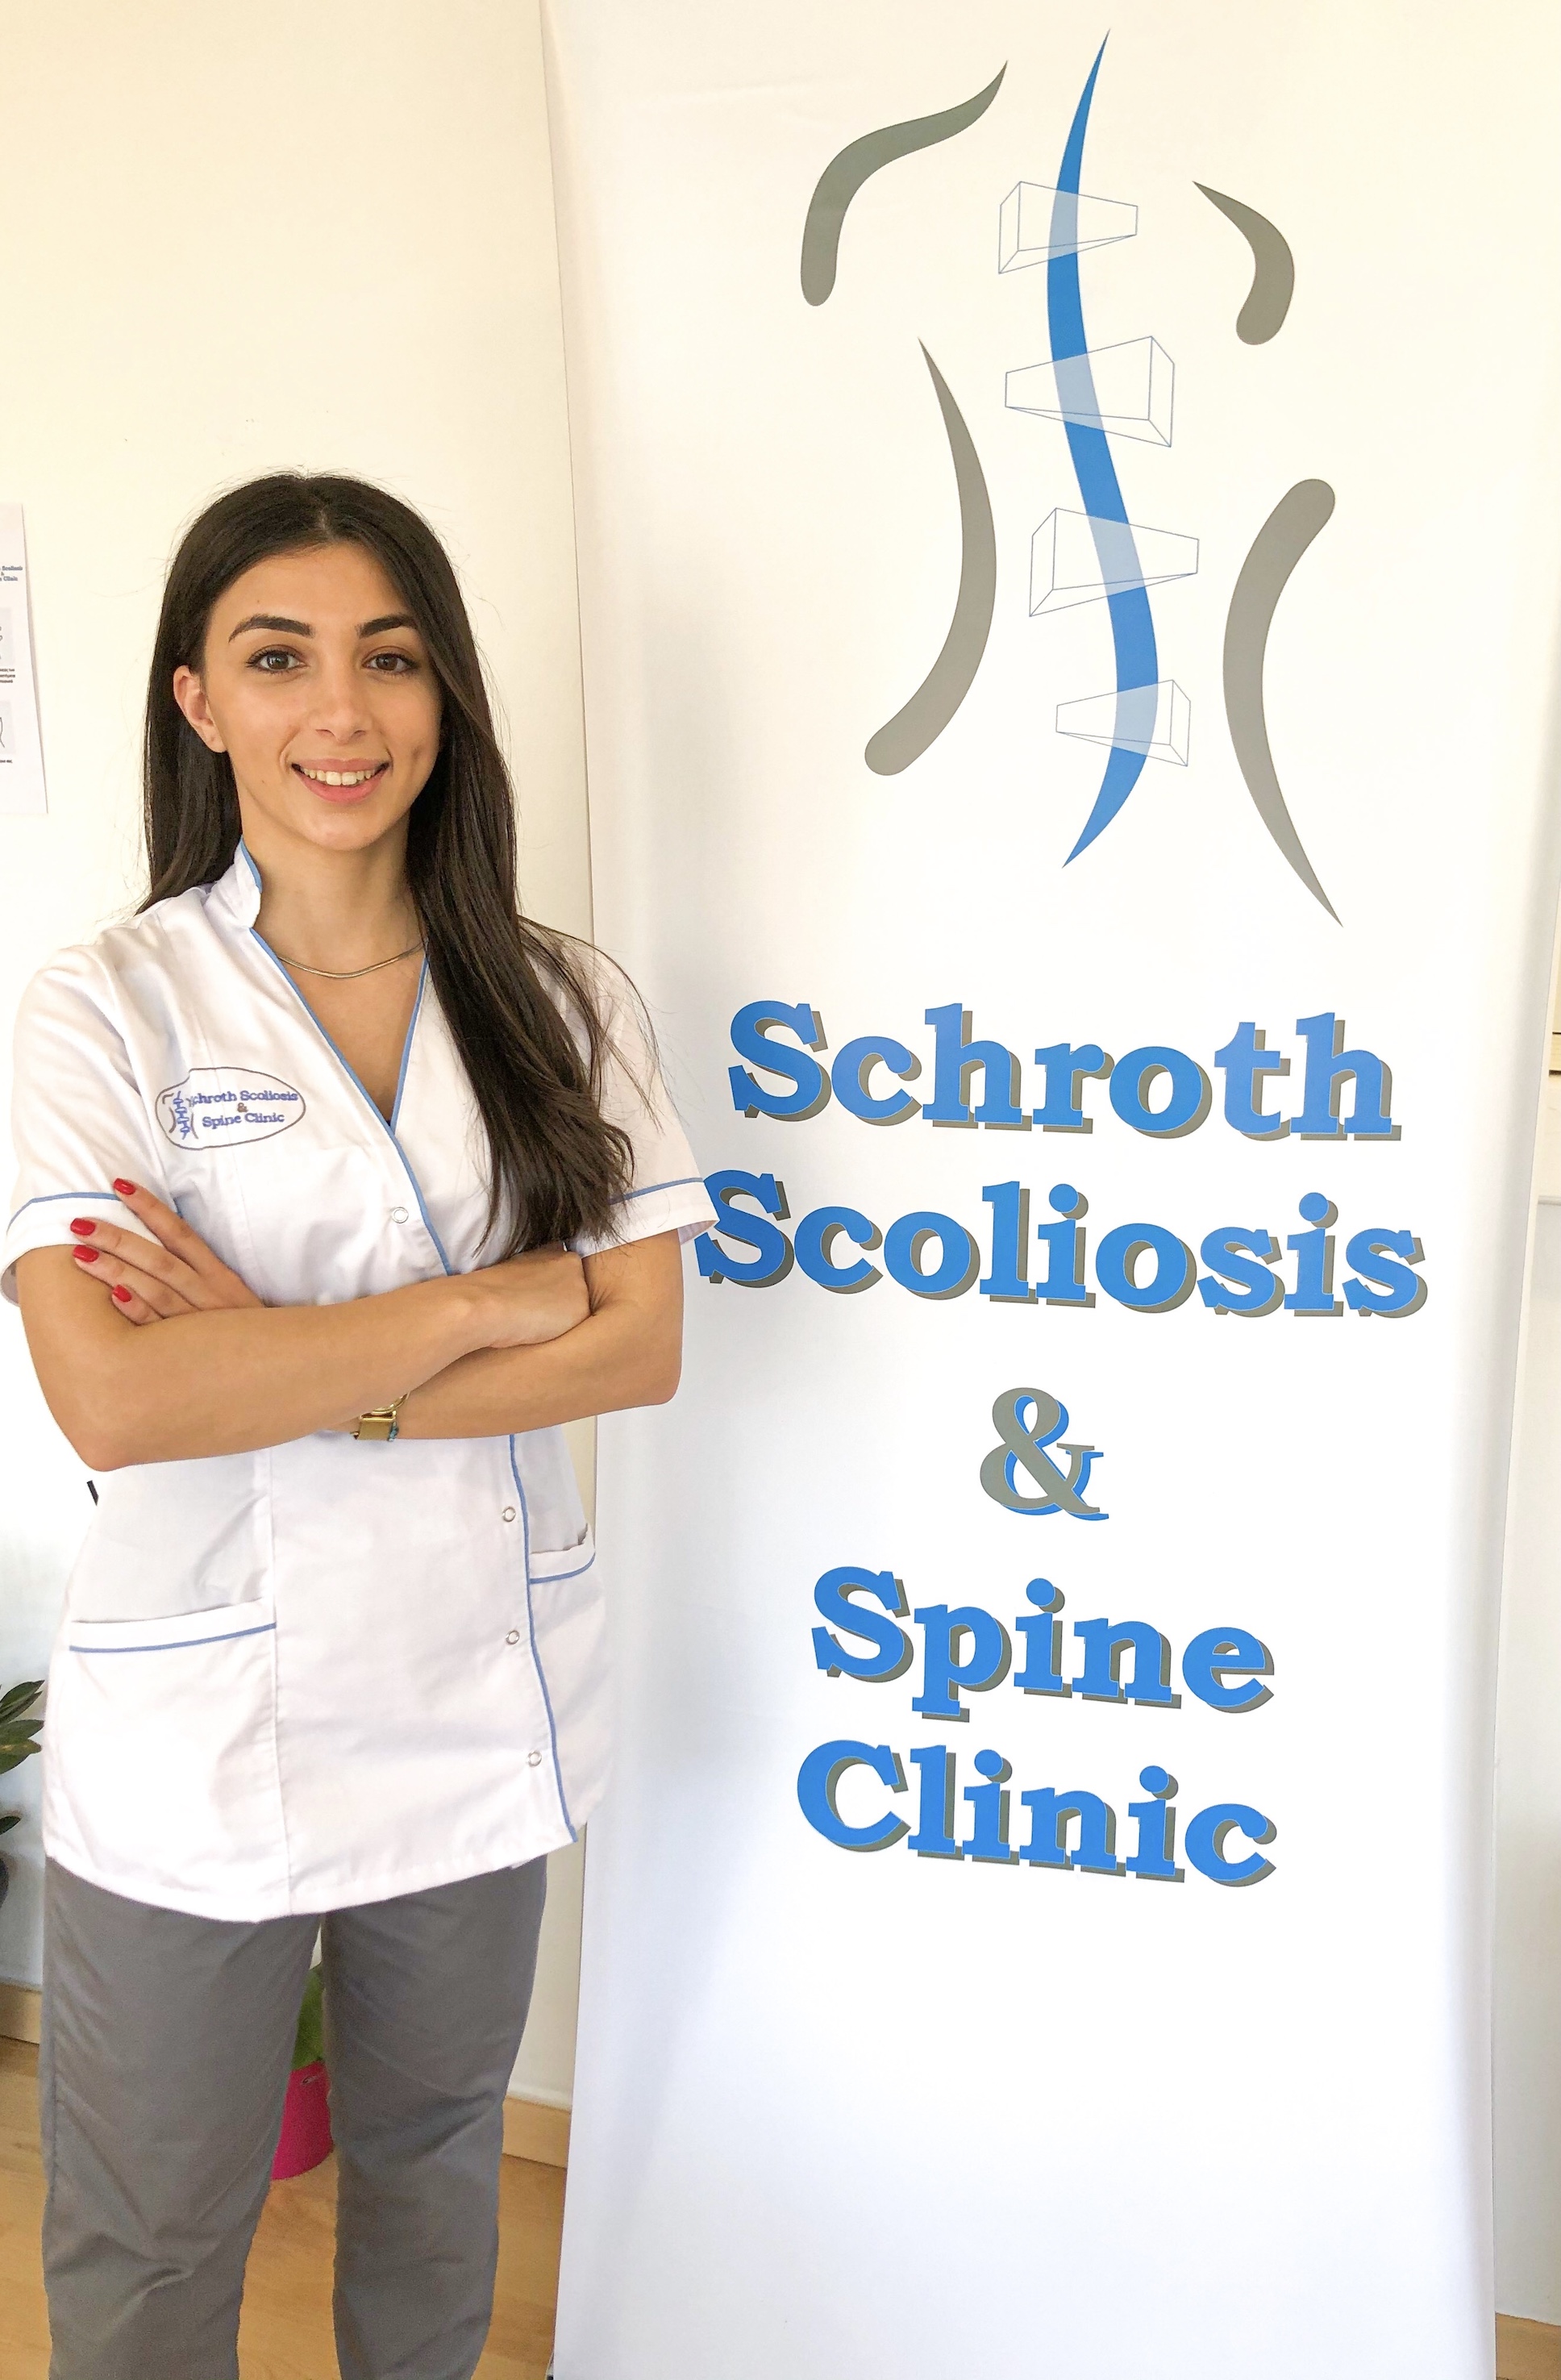 k.a.schroth scoliosis spine clinic team